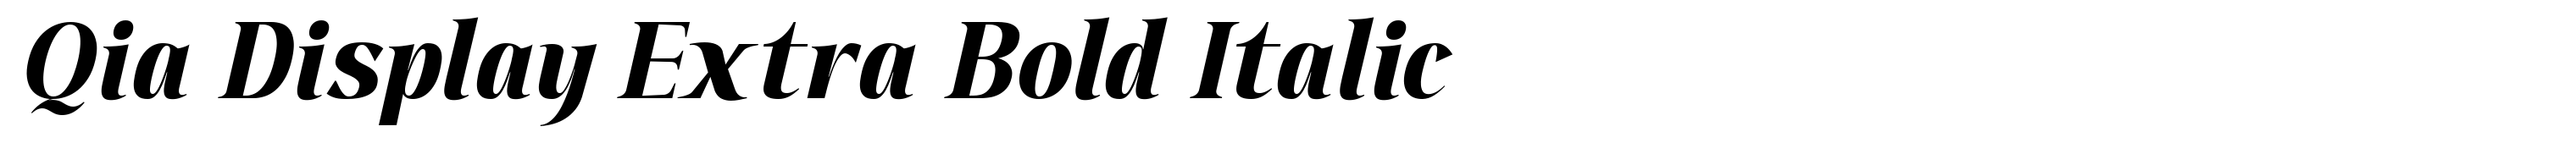 Qia Display Extra Bold Italic